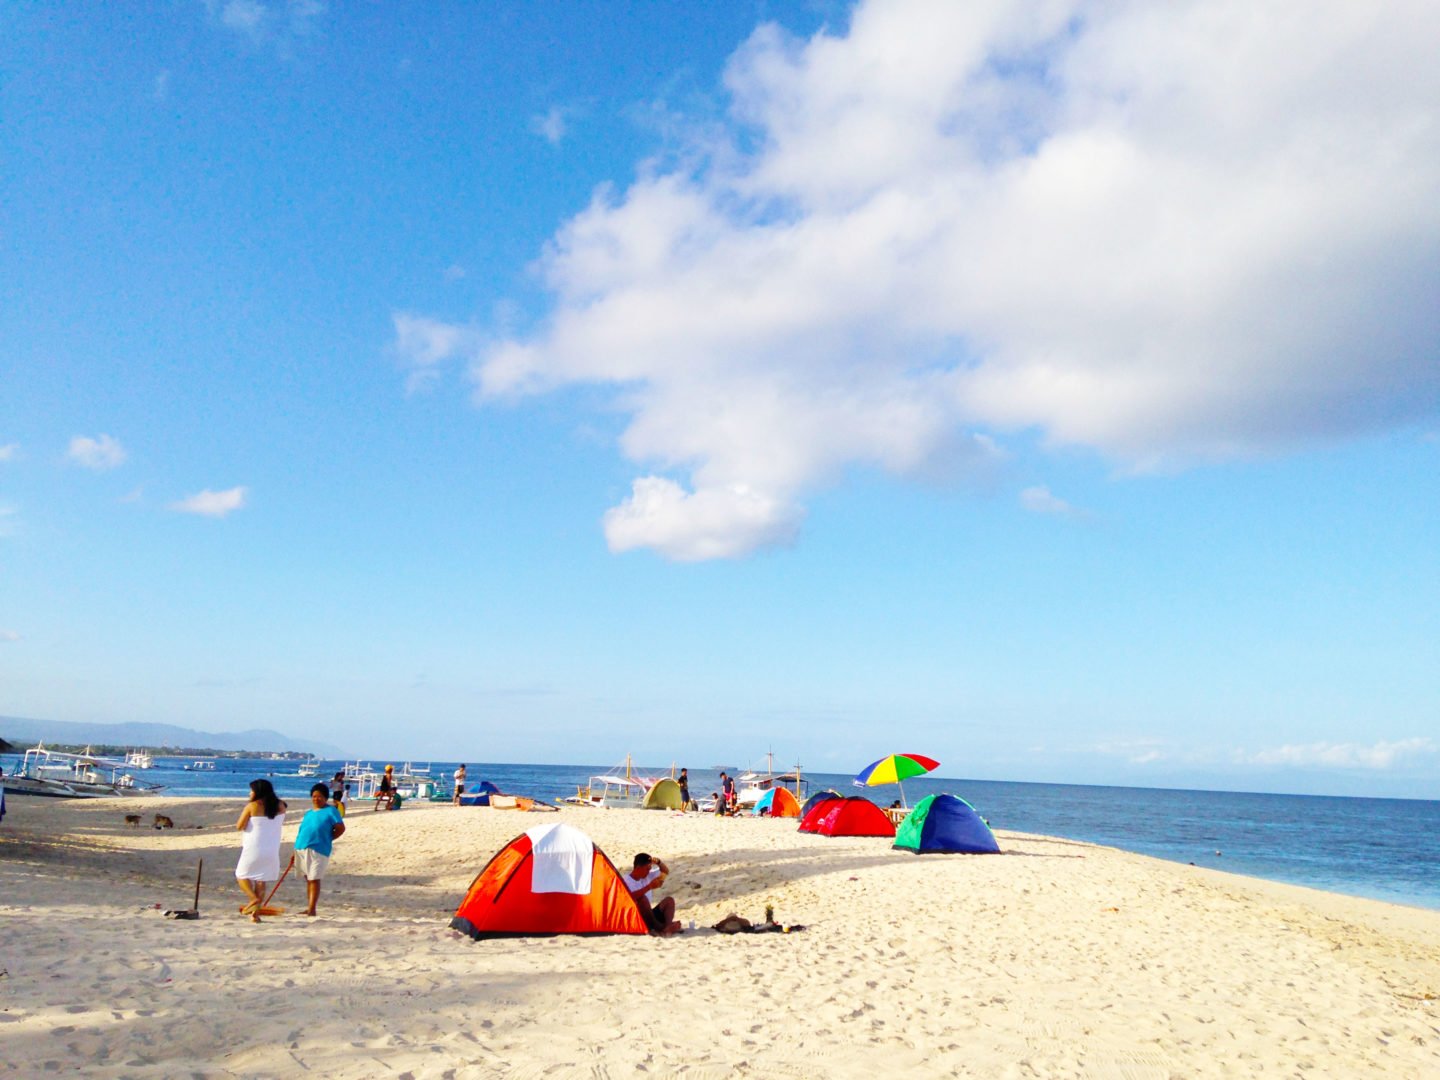 Basdaku White Beach: Another Summer Destination in Moalboal, Cebu